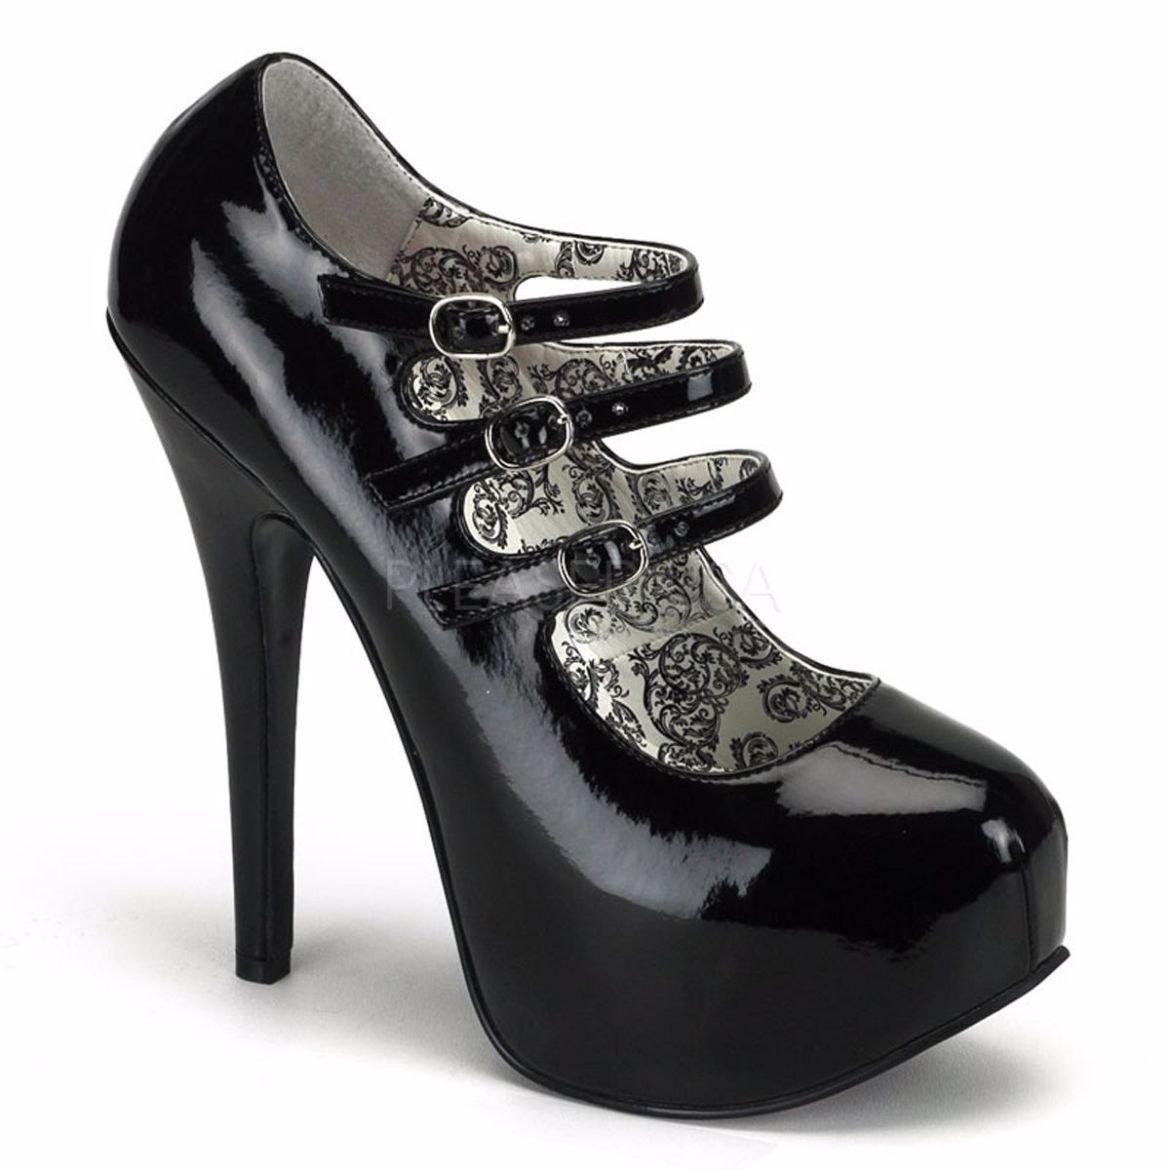 Product image of Bordello Teeze-05 Black Patent, 5 3/4 inch (14.6 cm) Heel, 1 3/4 inch (4.4 cm) Platform Court Pump Shoes